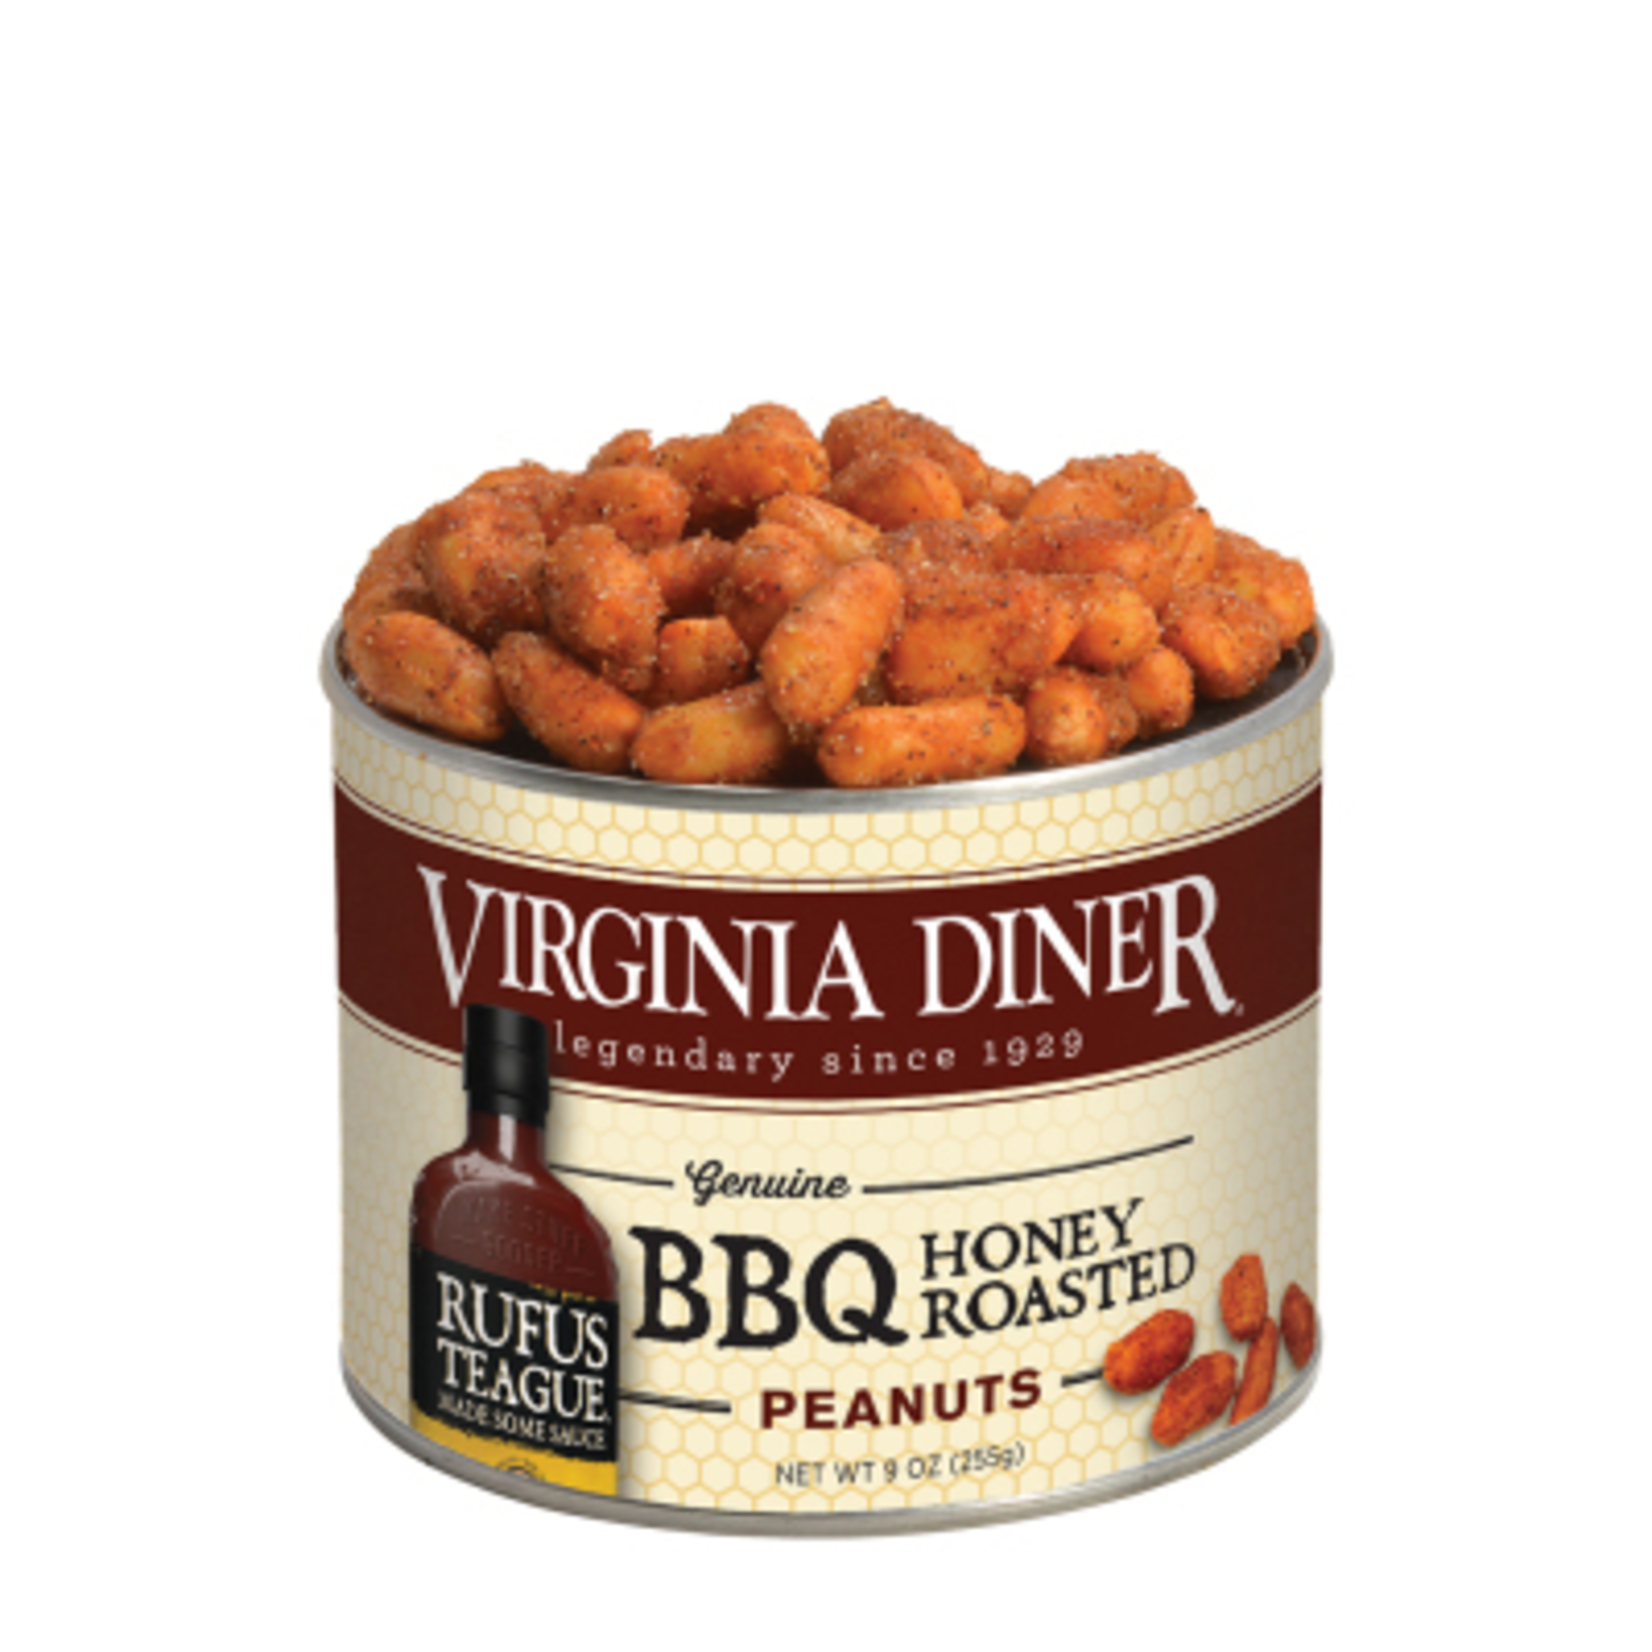 Virginia Diner Rufus Teague BBQ Peanuts